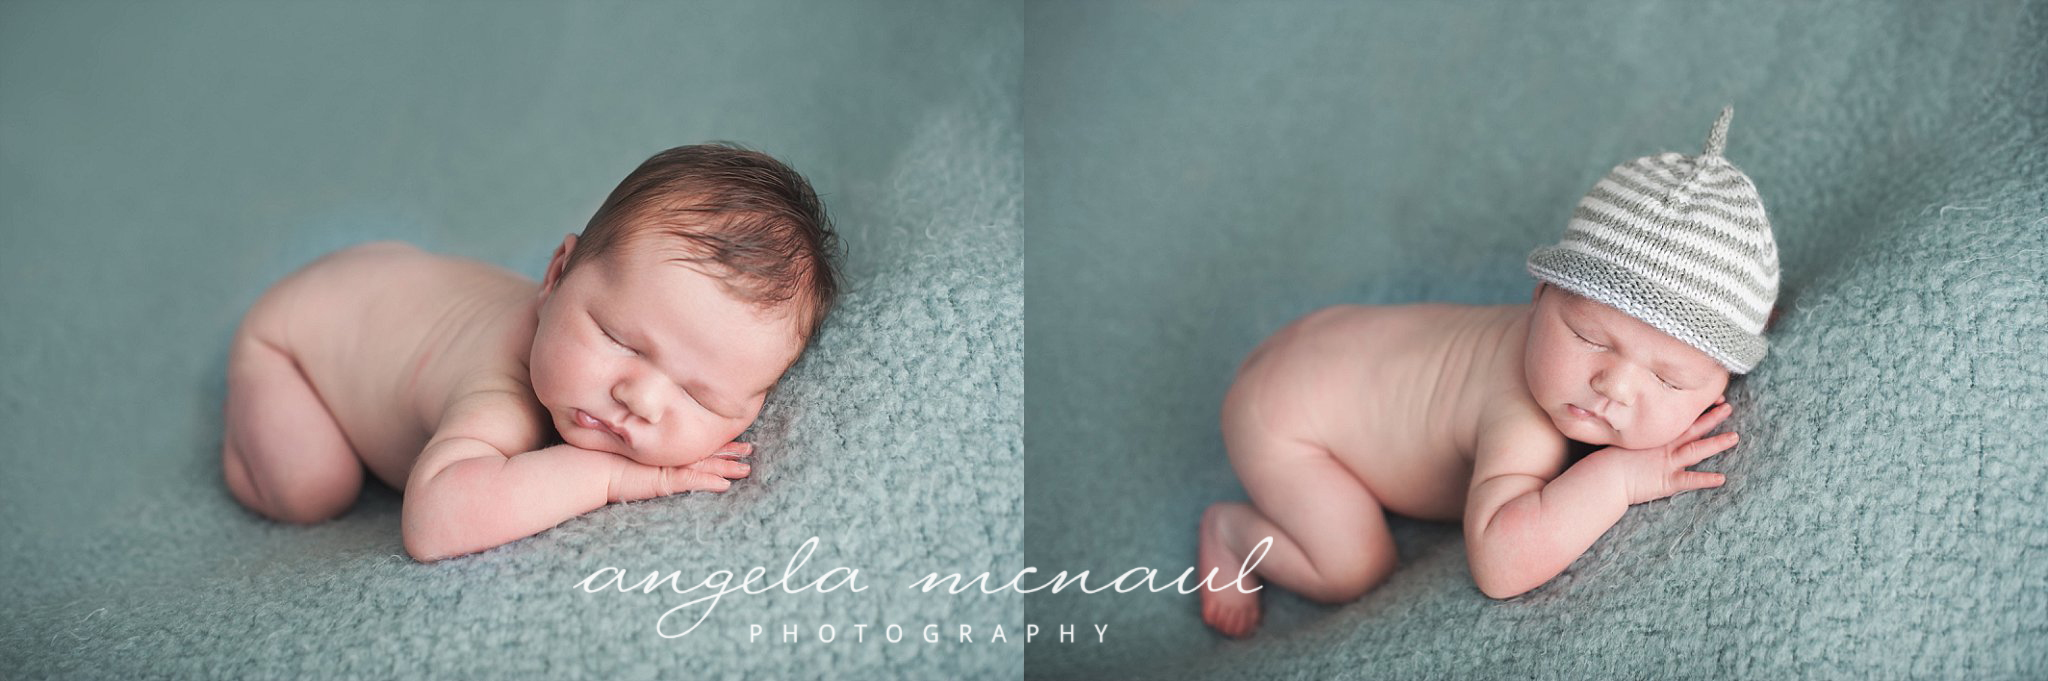 Newborn Photographer Charlottesville Photography_0166.jpg